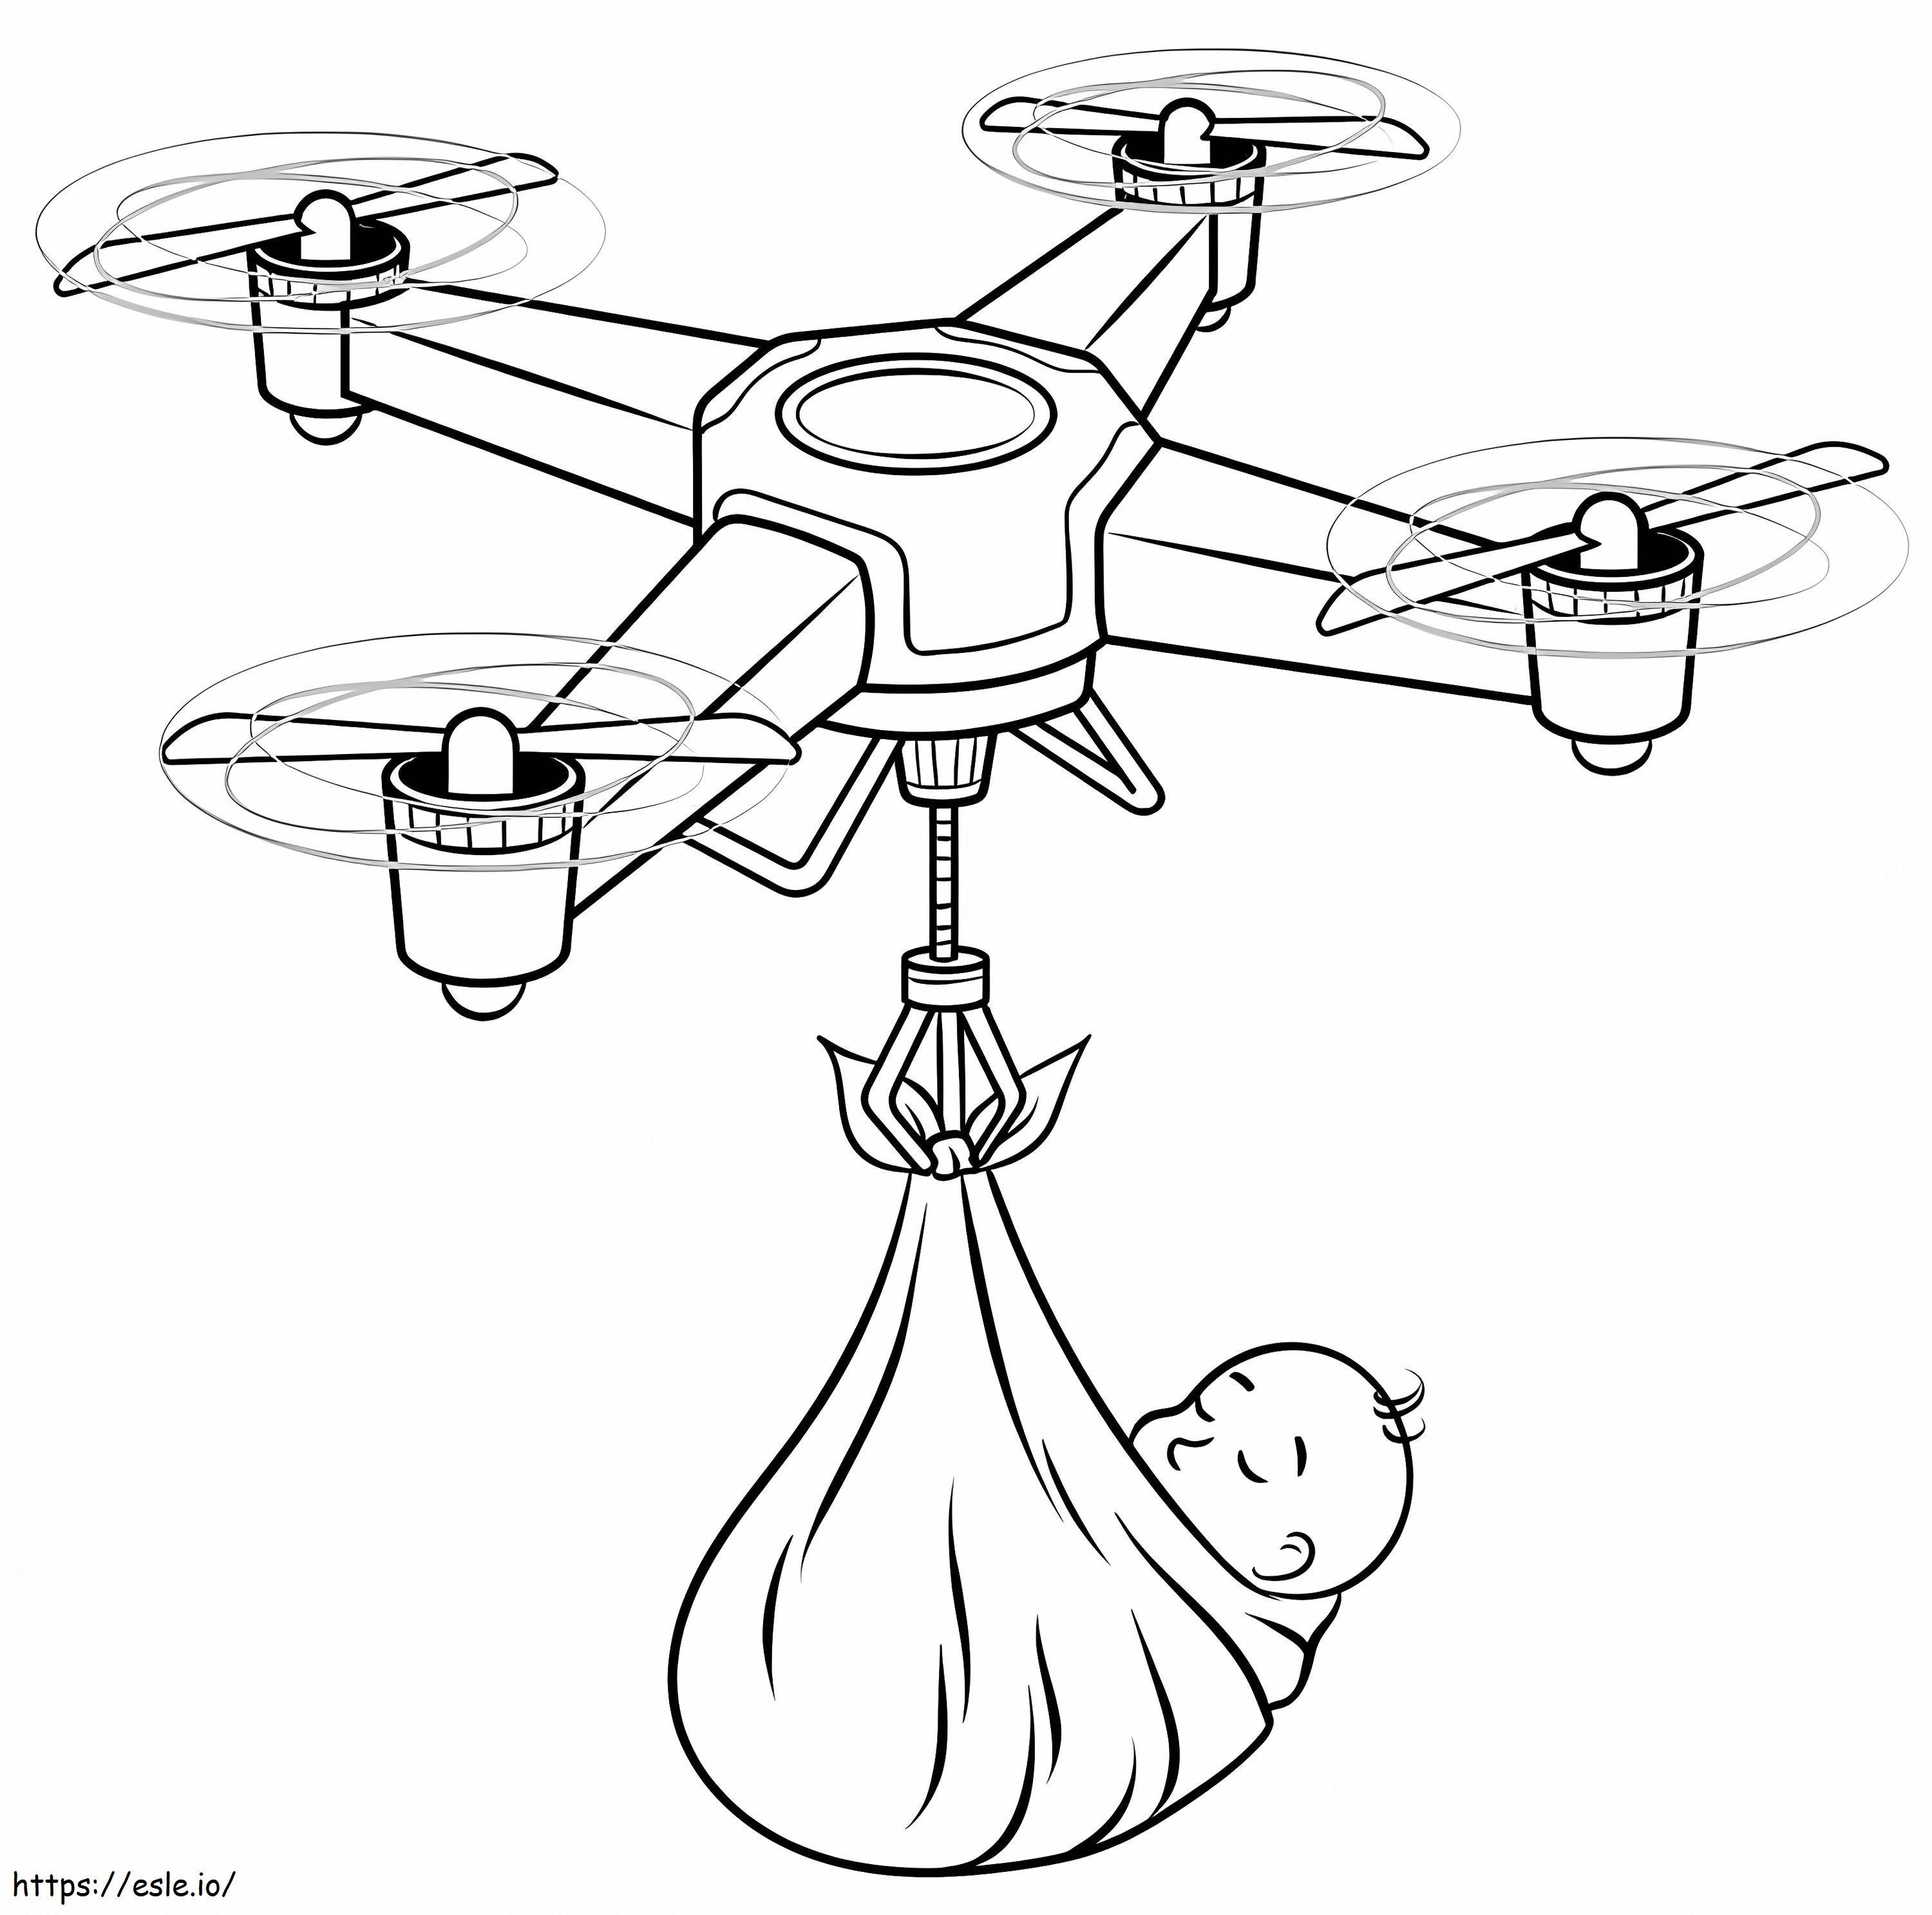 drone e bebê para colorir